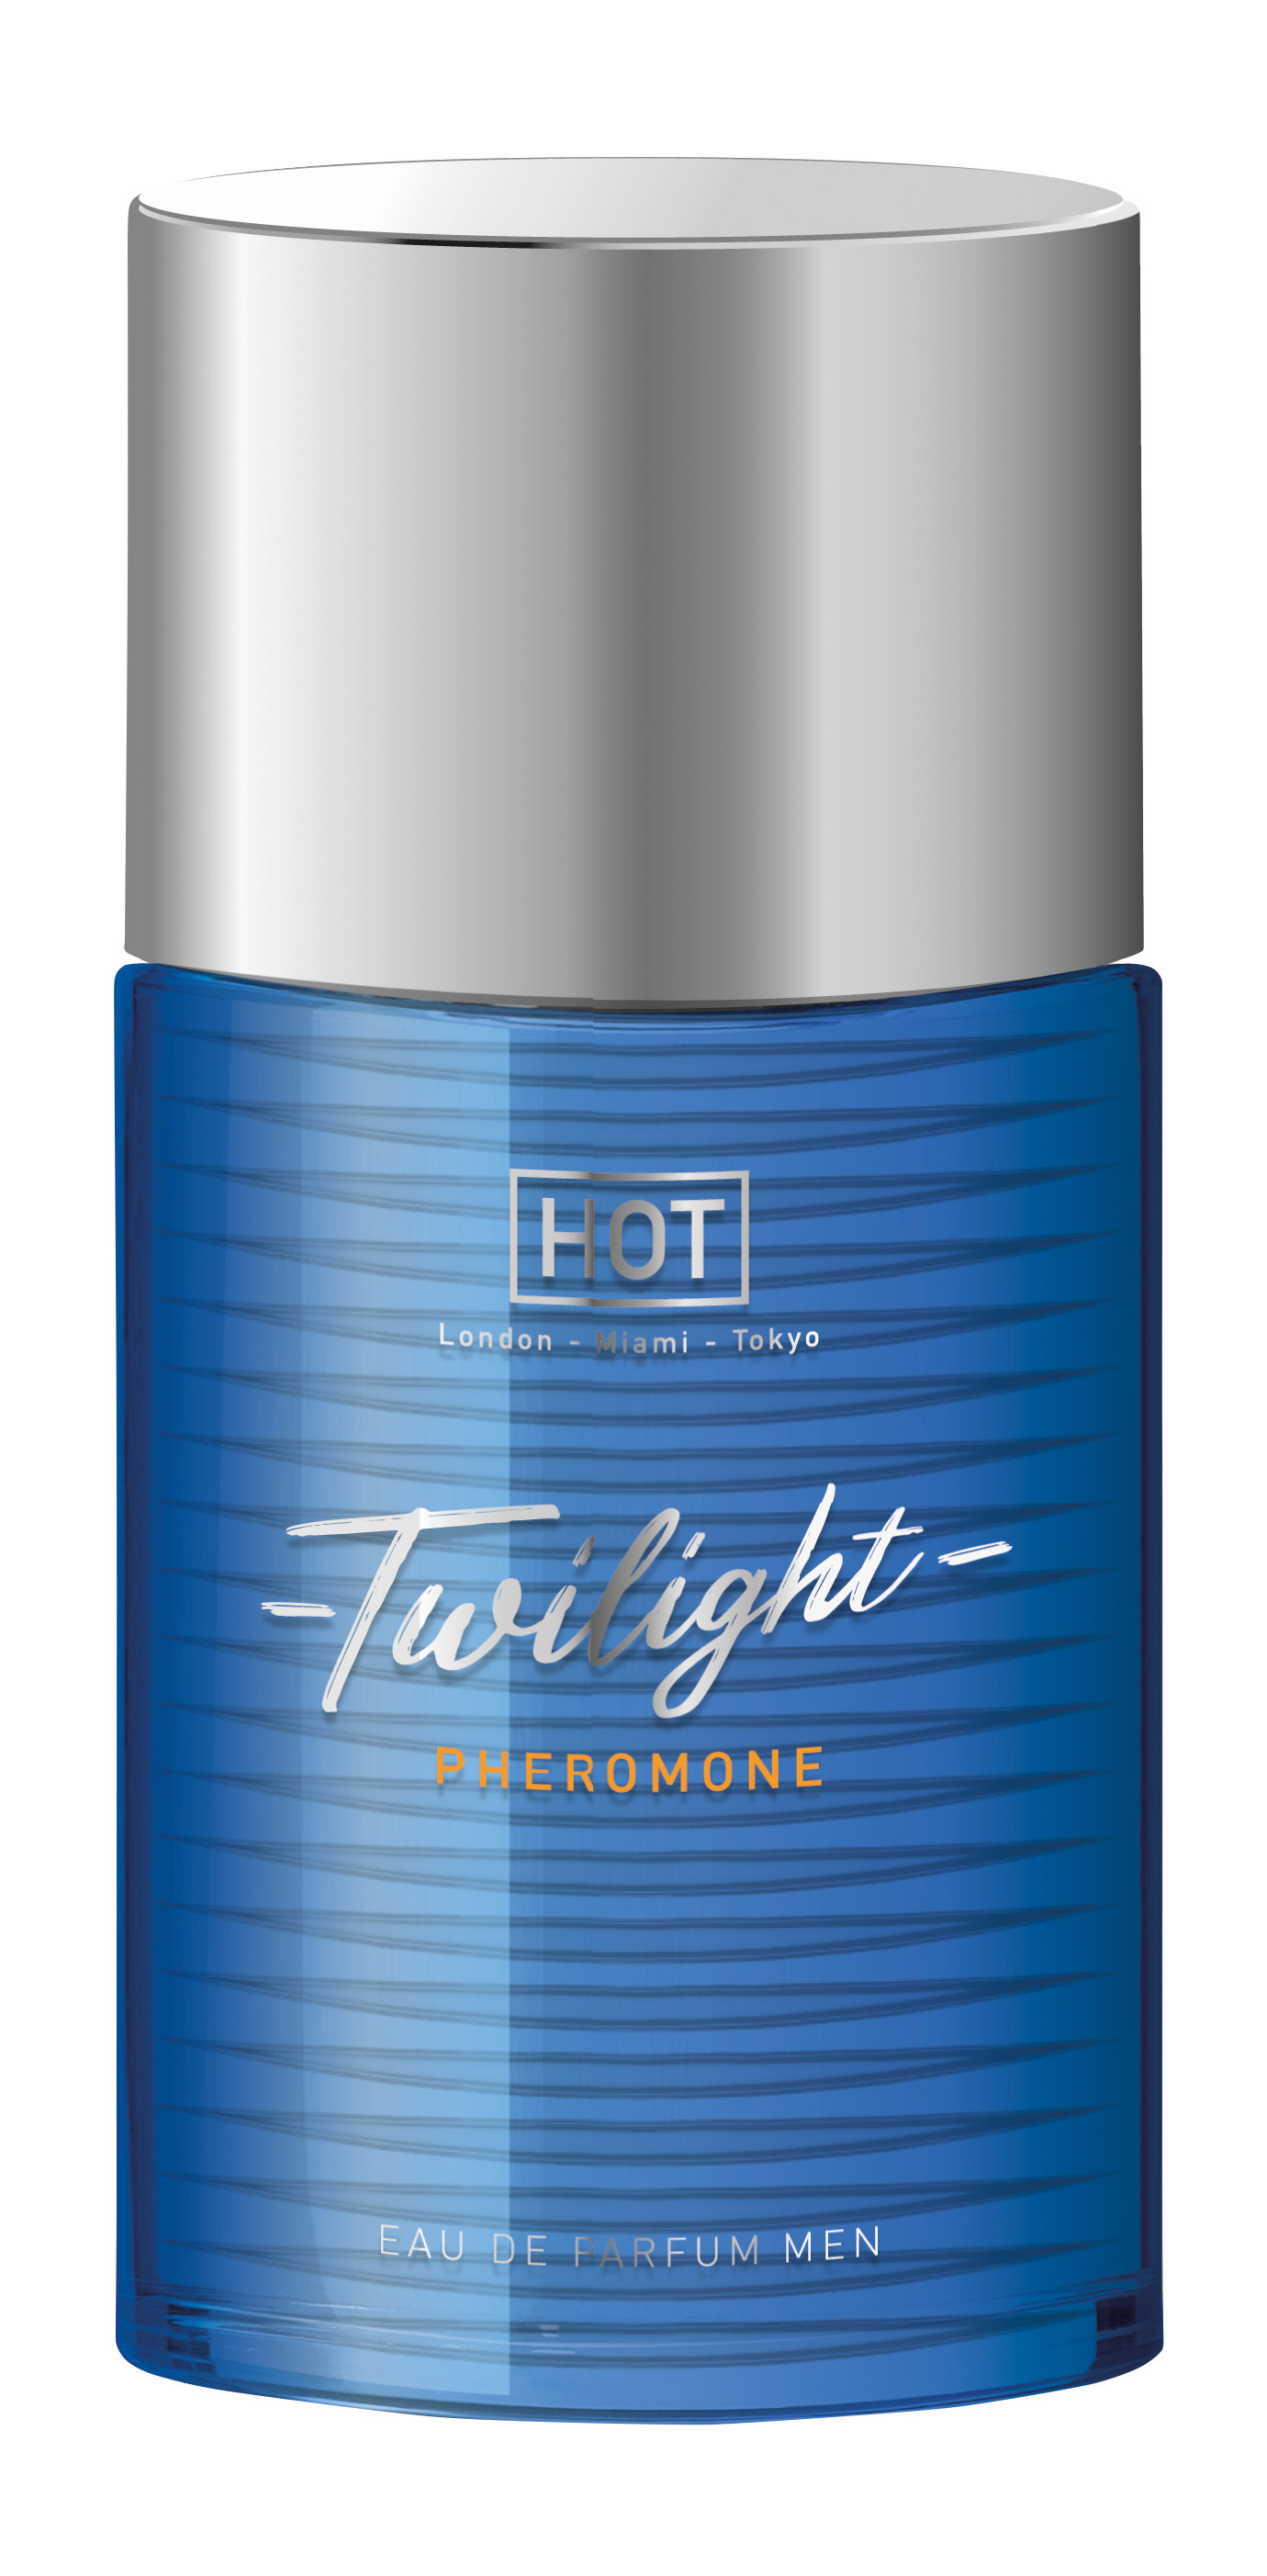 HOT Twilight Pheromone Parfum men 50ml